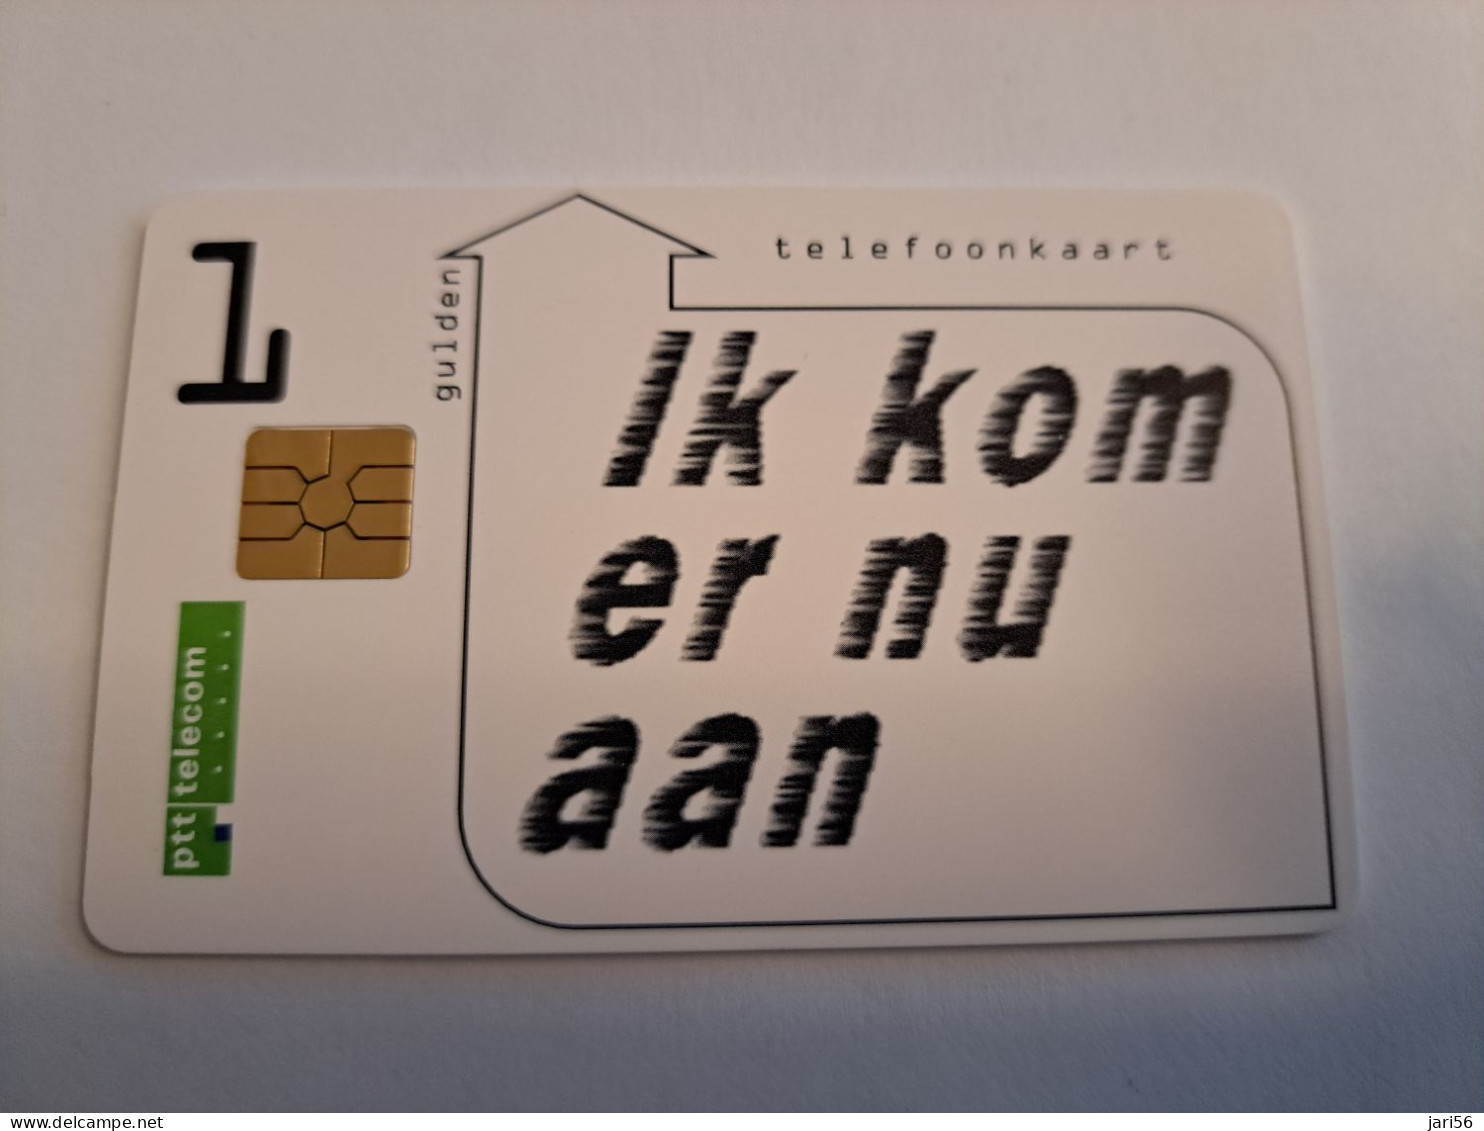 NETHERLANDS  HFL 1,00    CC  MINT CHIP CARD   / COMPLIMENTSCARD / FROM SERIE / MINT   ** 15953** - [3] Handy-, Prepaid- U. Aufladkarten